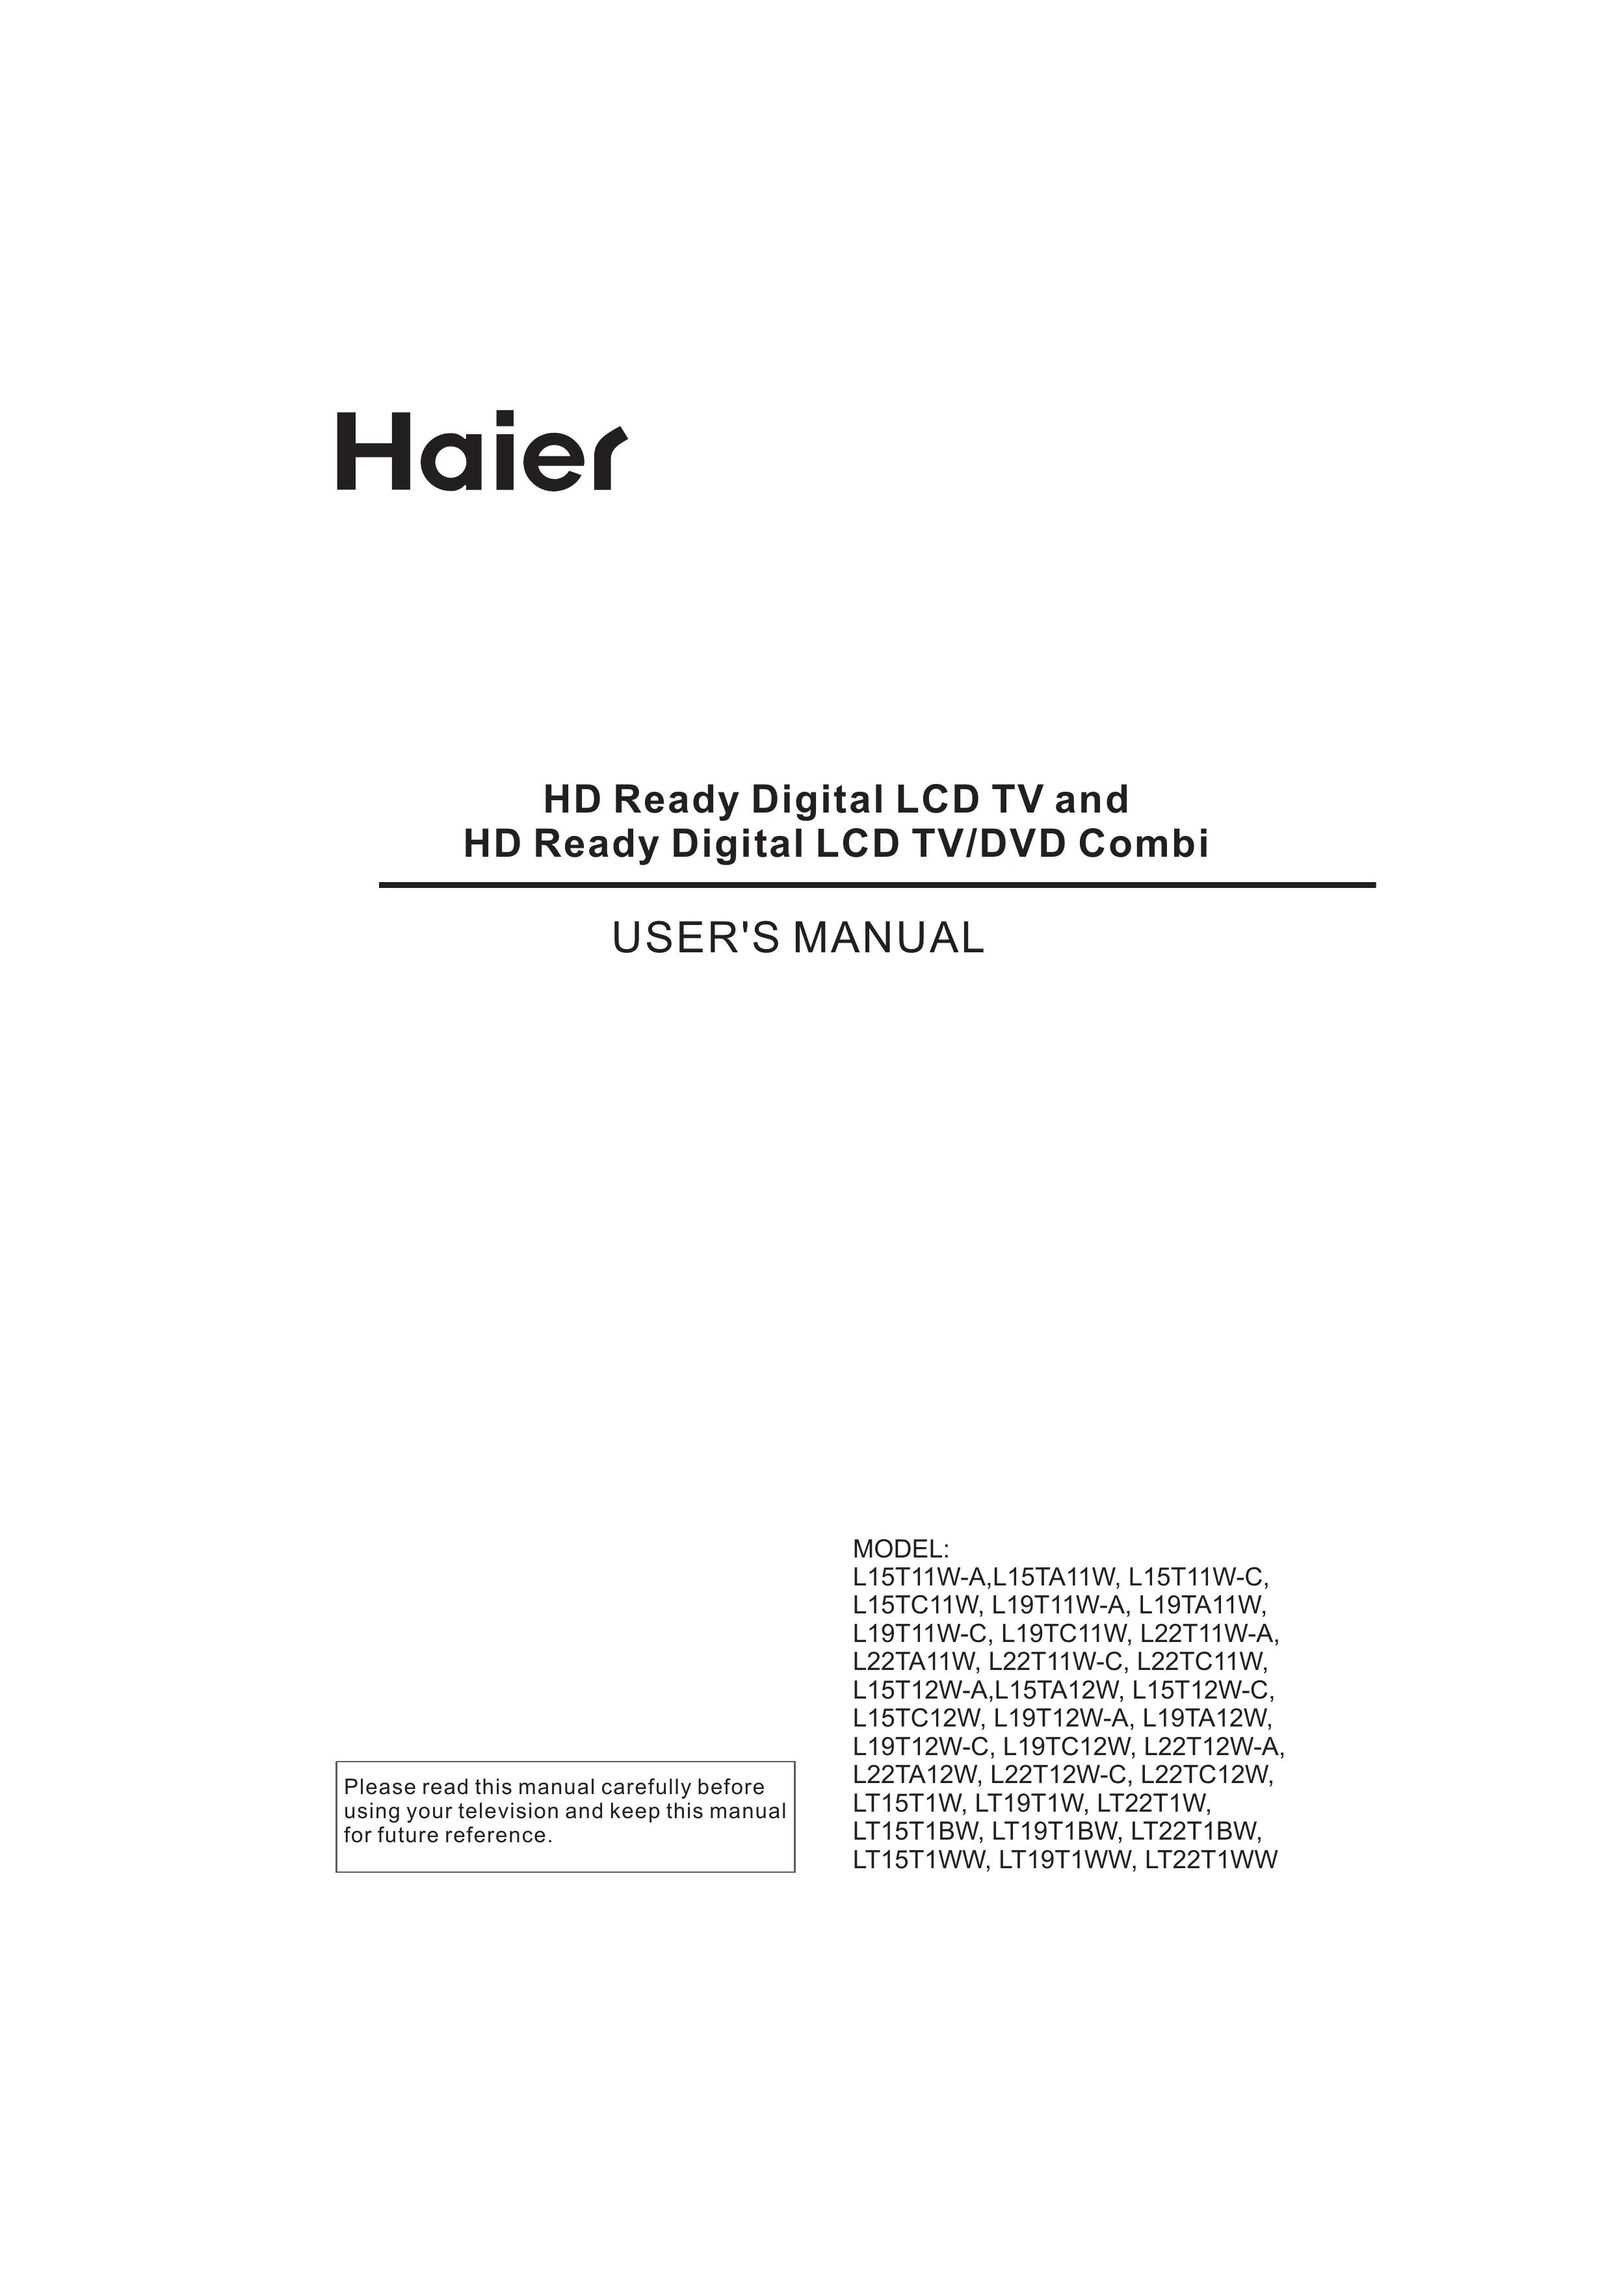 Haier L19TC11W TV DVD Combo User Manual